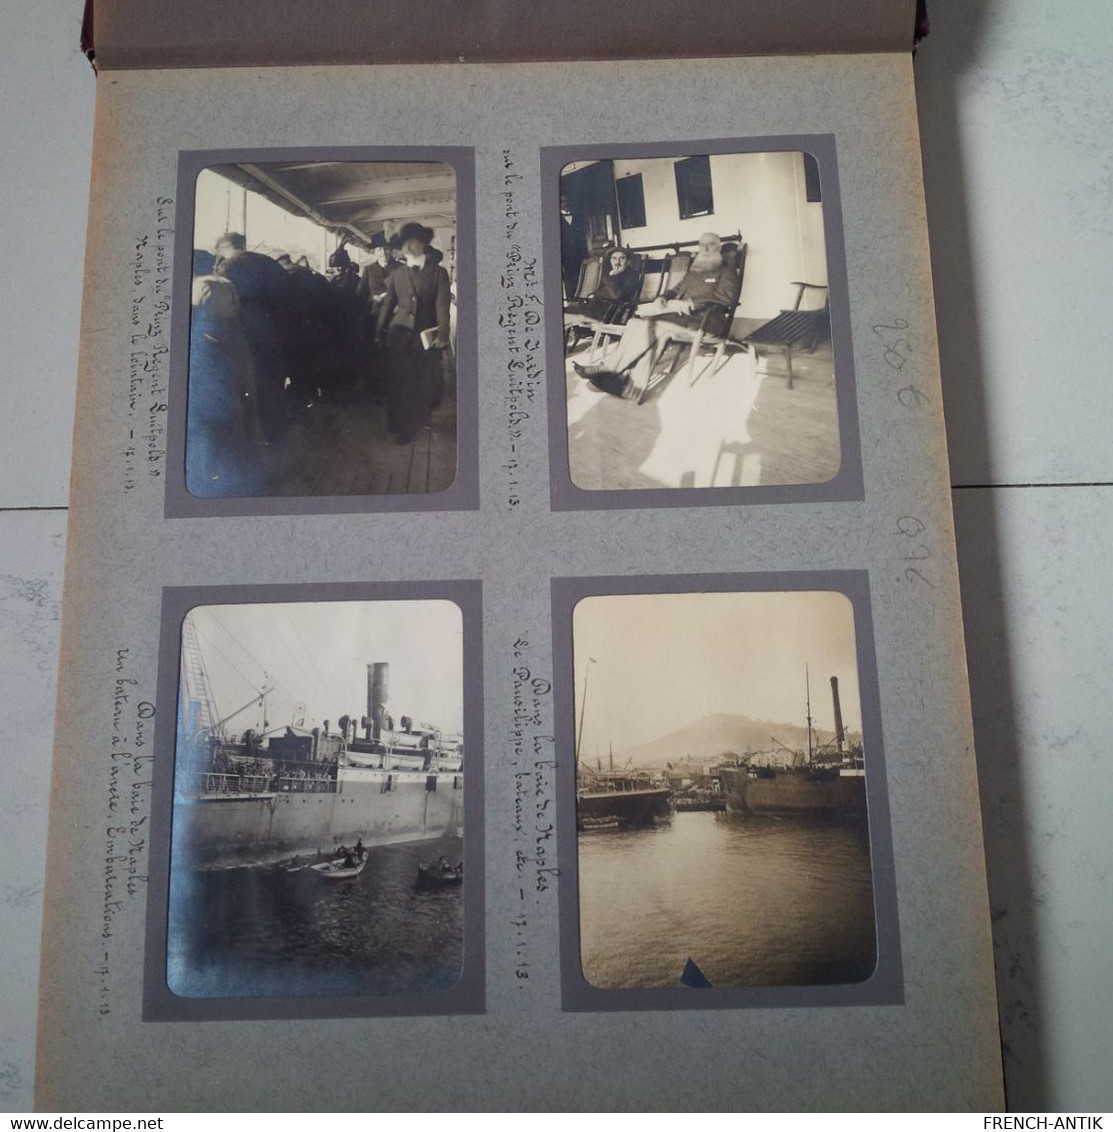 ALBUM PHOTO VOYAGE BATEAU PRINZ REGENT LUITPOLD NAPLES ALEXANDRIE PYRAMIDE HELIOPOLIS KAFR EL DAWWAR 1913 - Albums & Verzamelingen